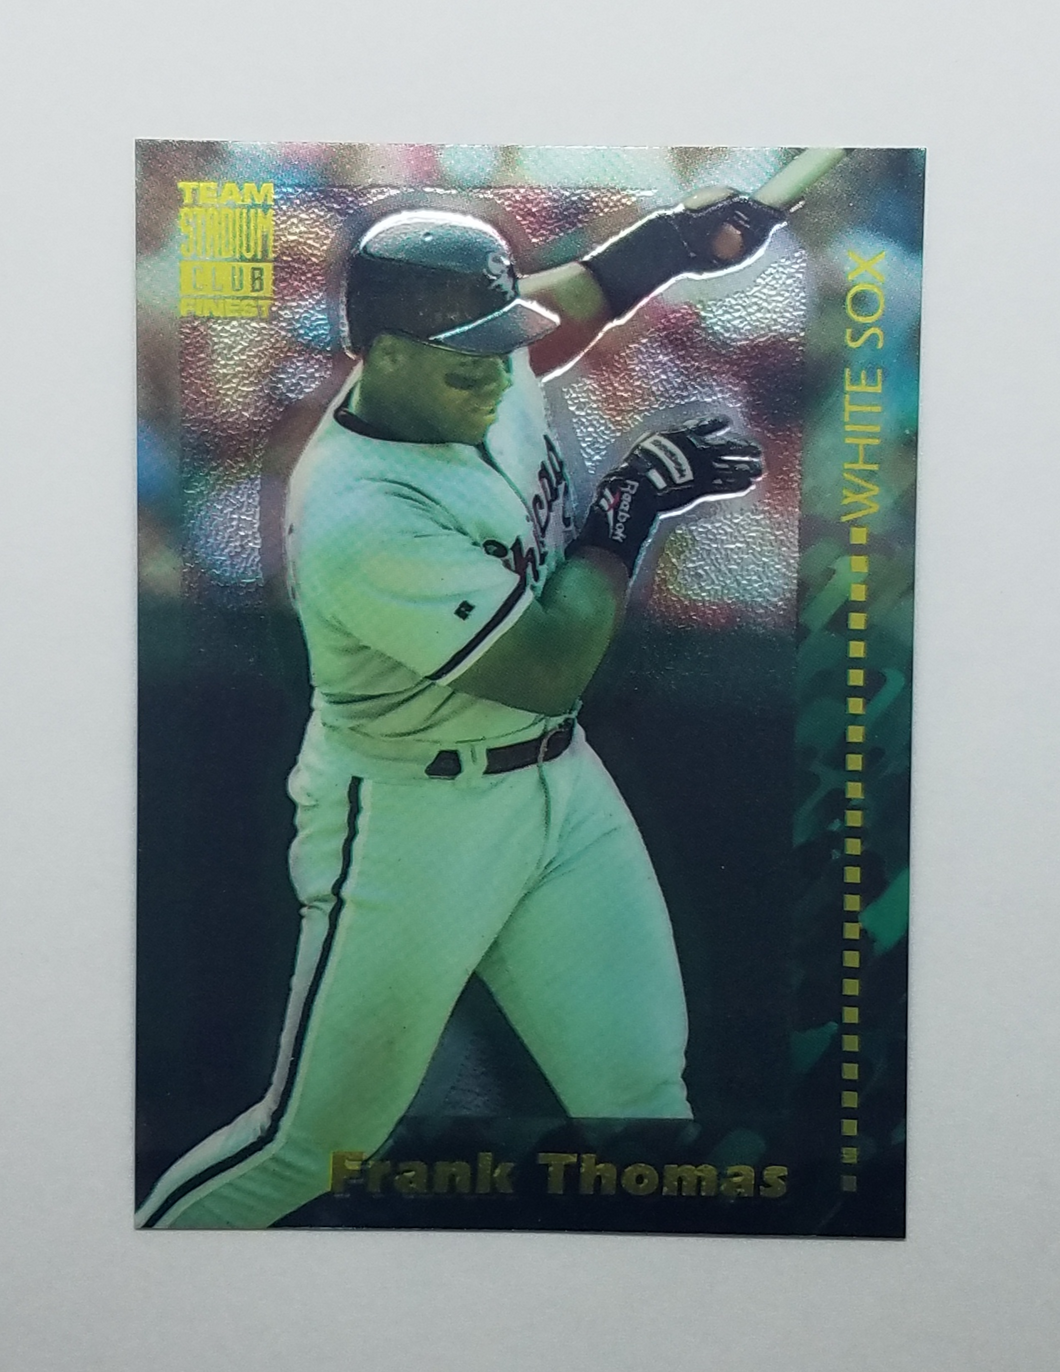 1994 Topps Finest Stadium Club Frank Thomas Baseball Card